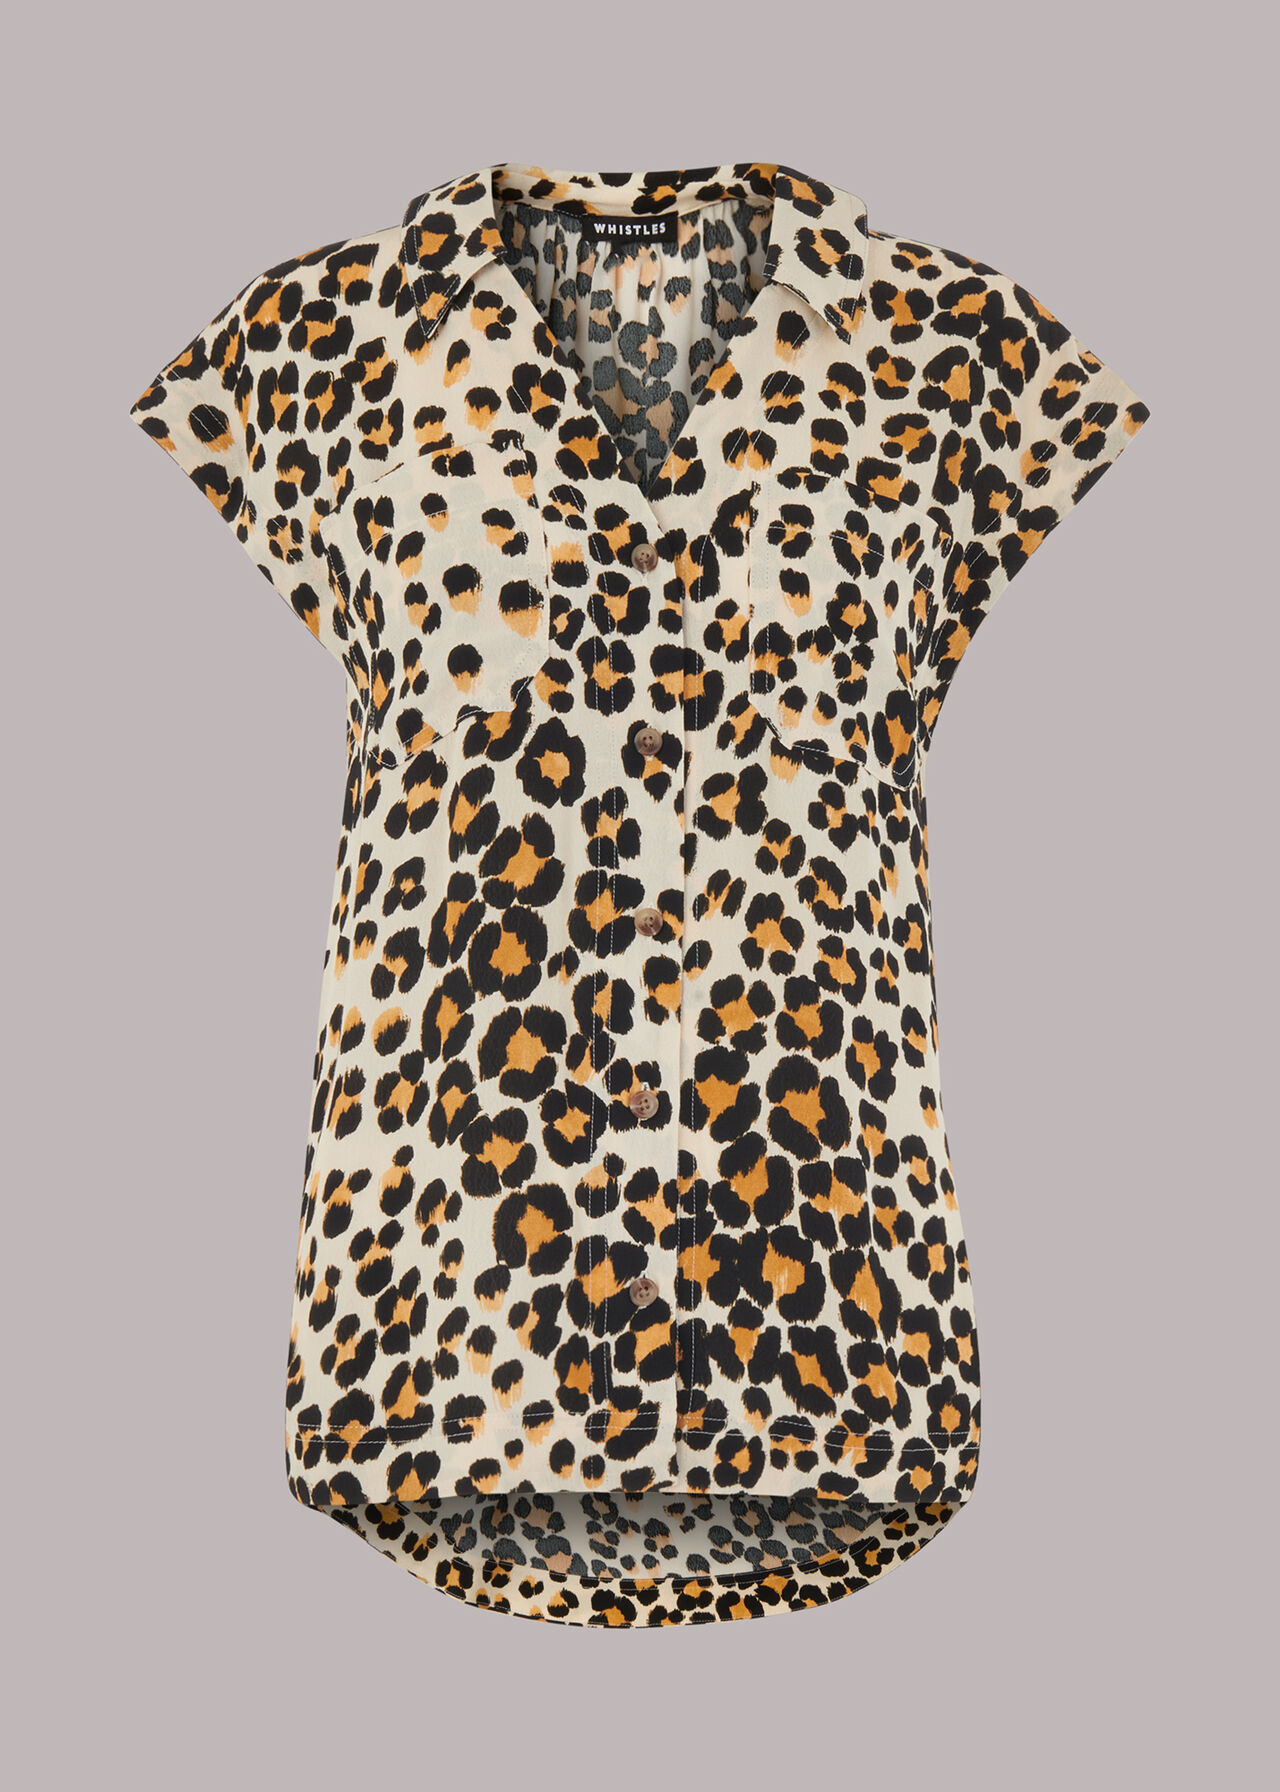 Painted Leopard Print Shirt